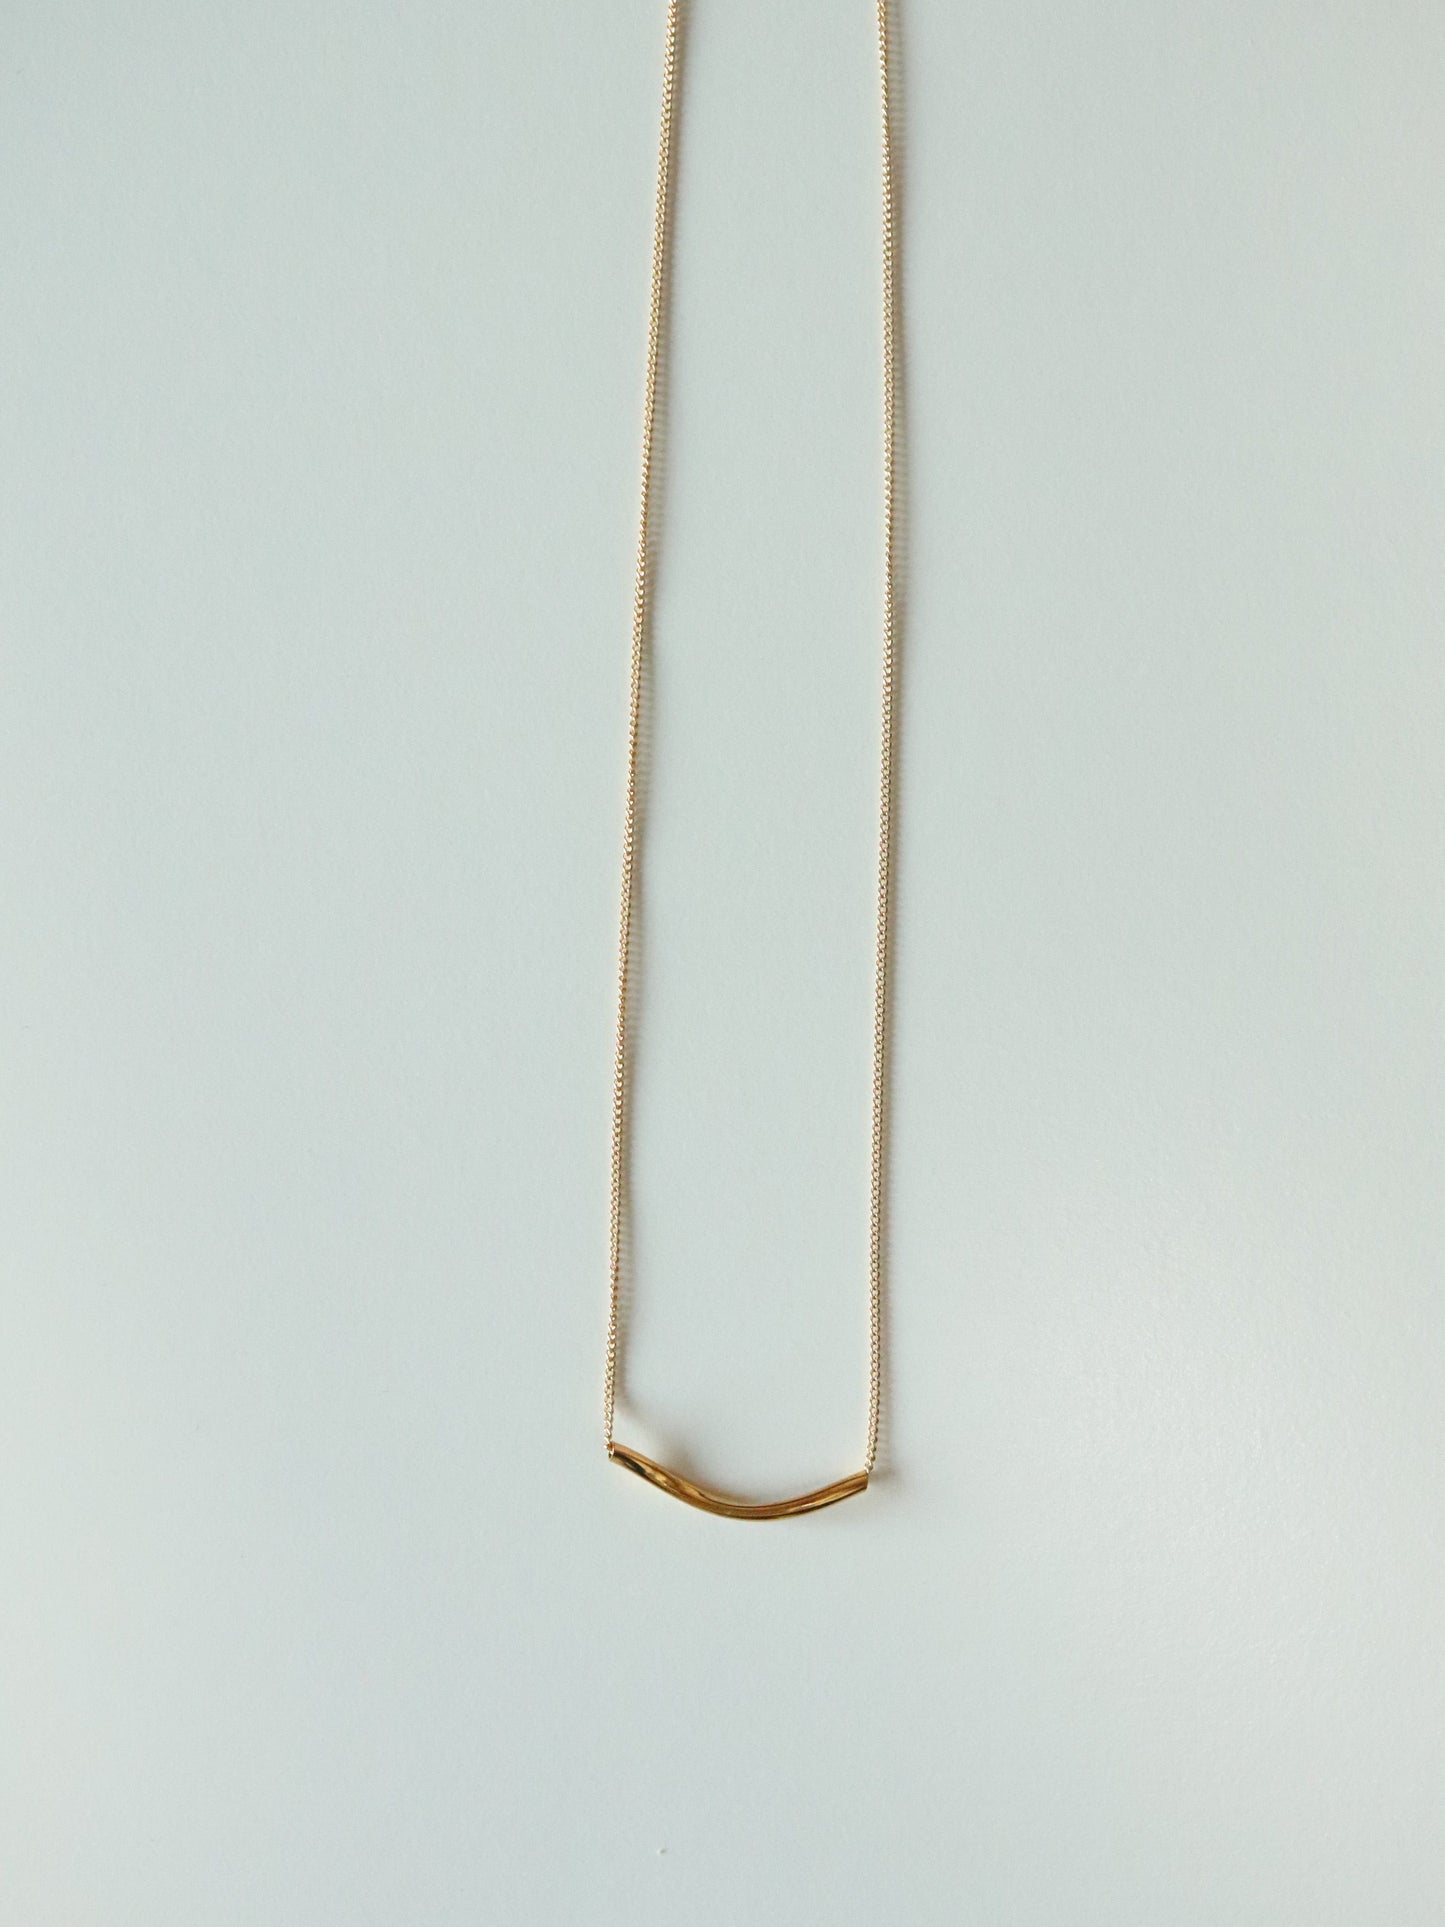 piyon necklace